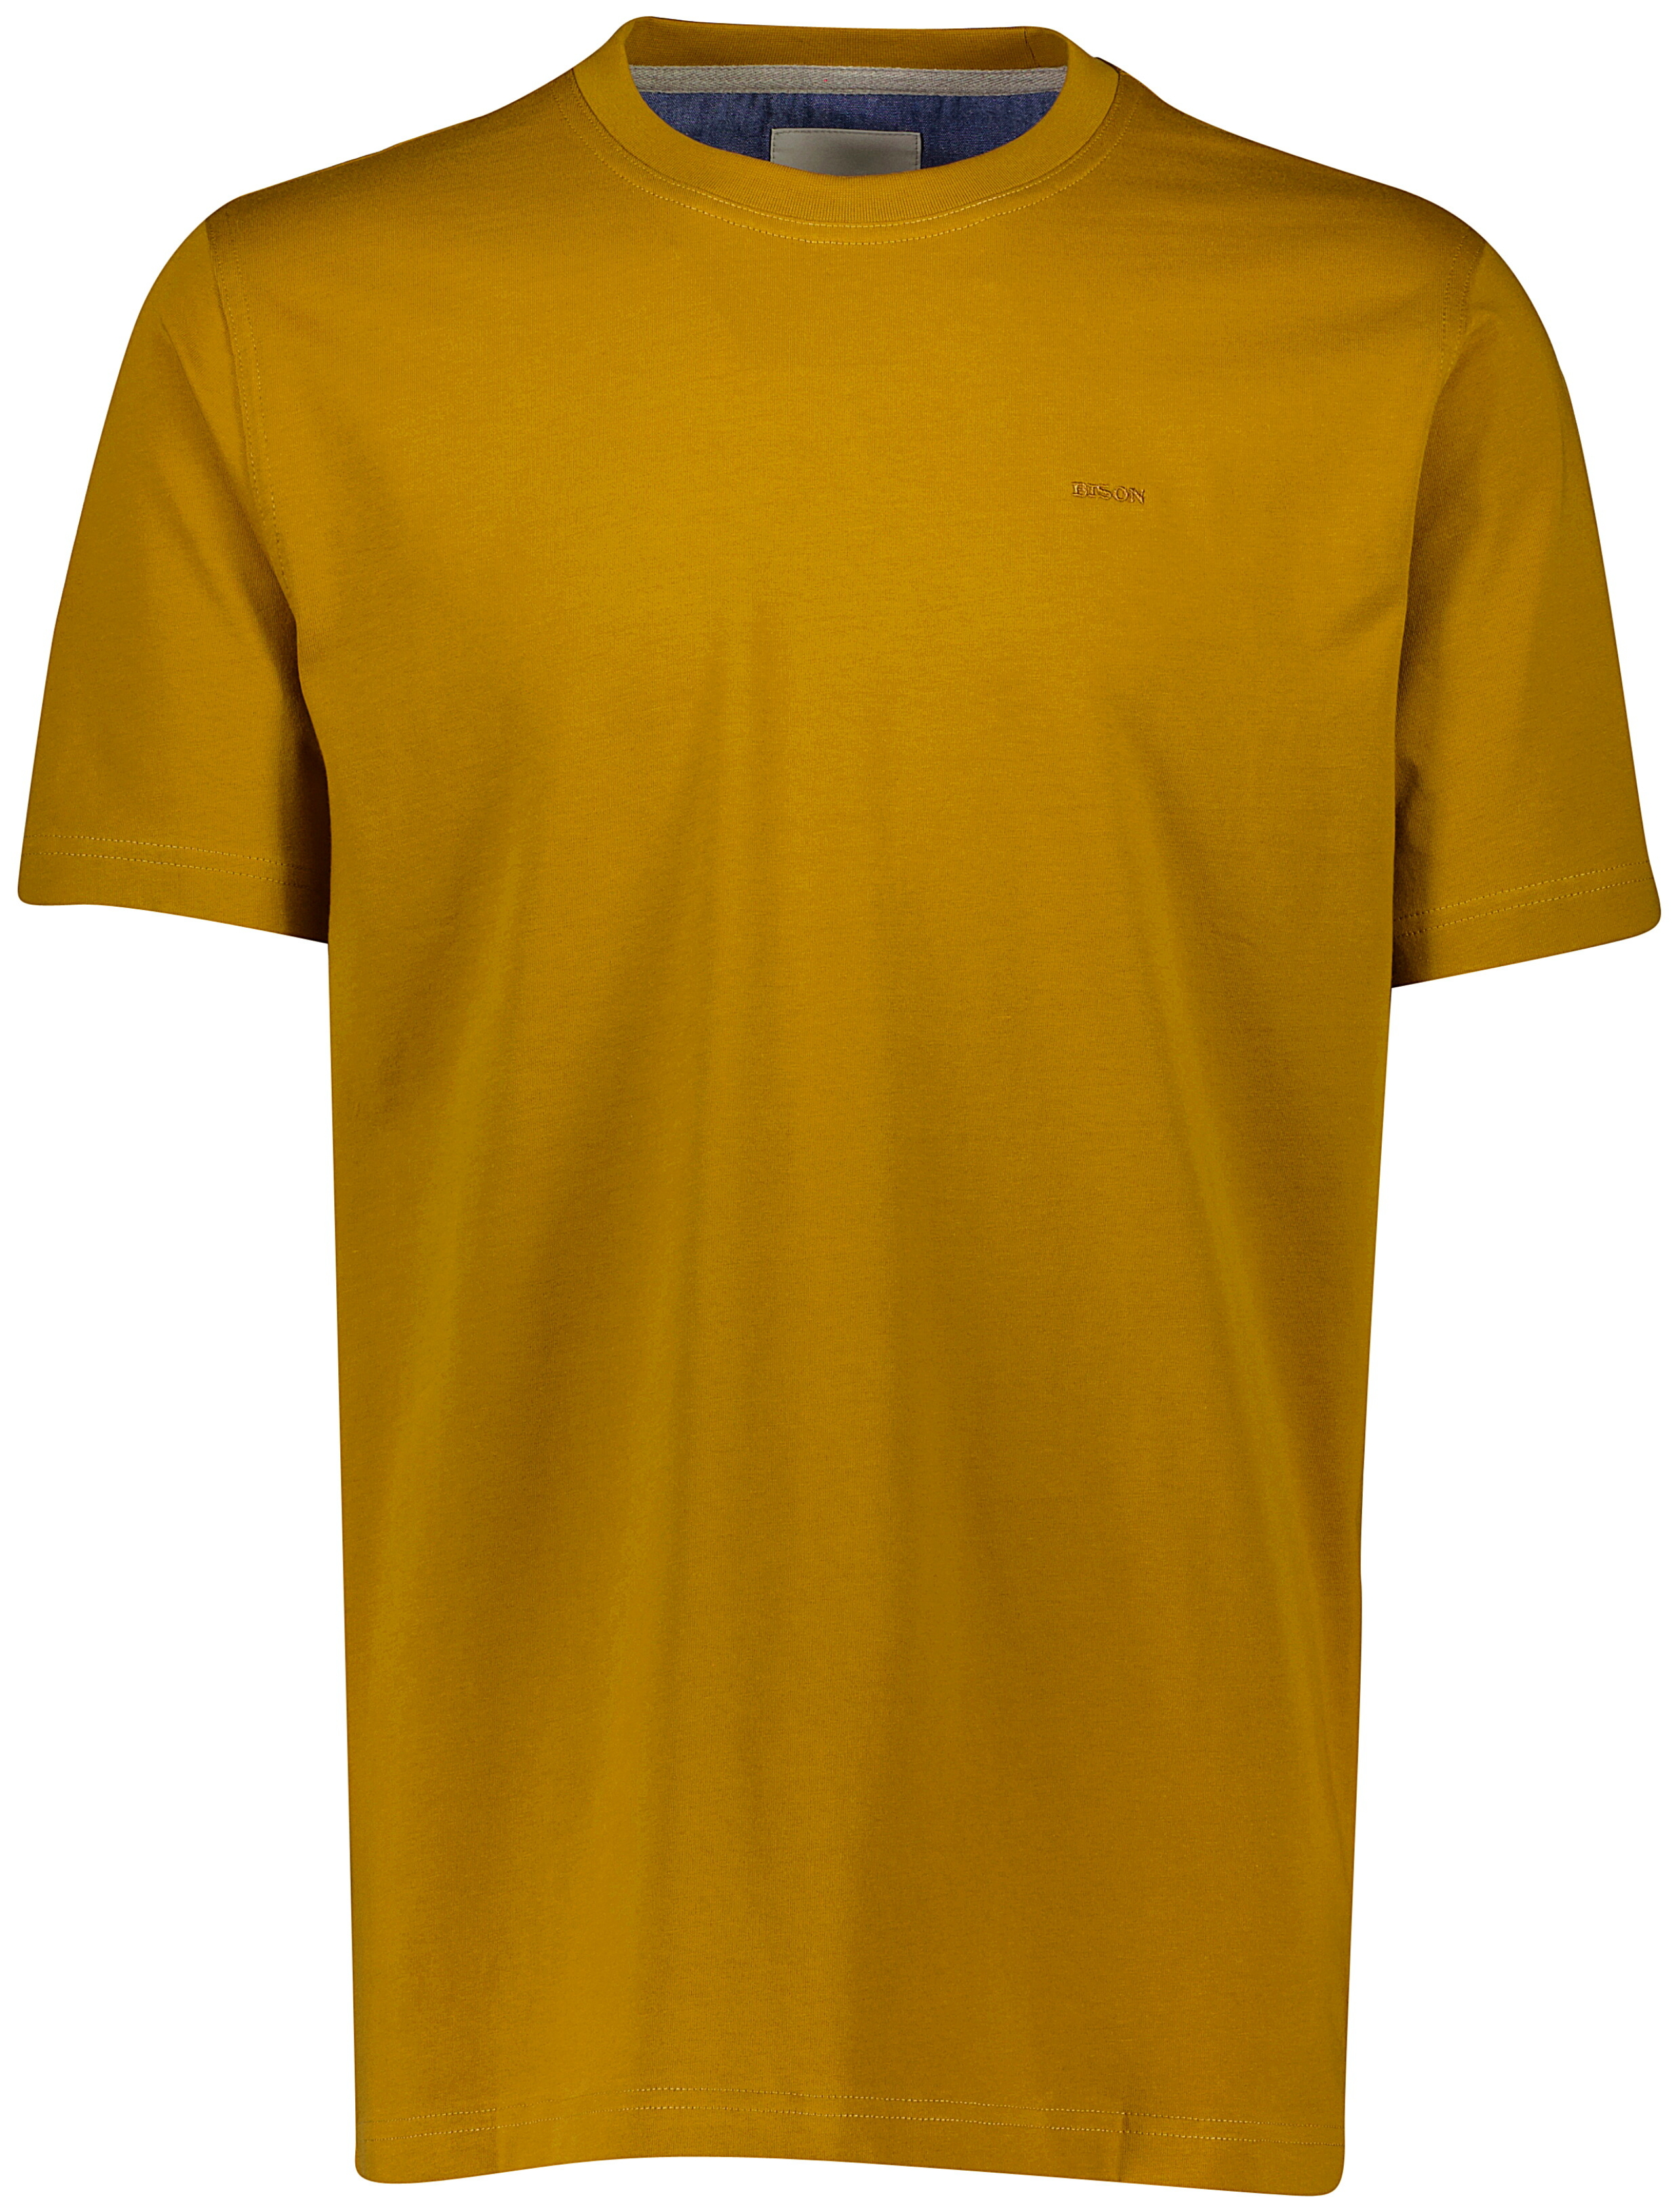 Bison T-shirt gul / dk yellow